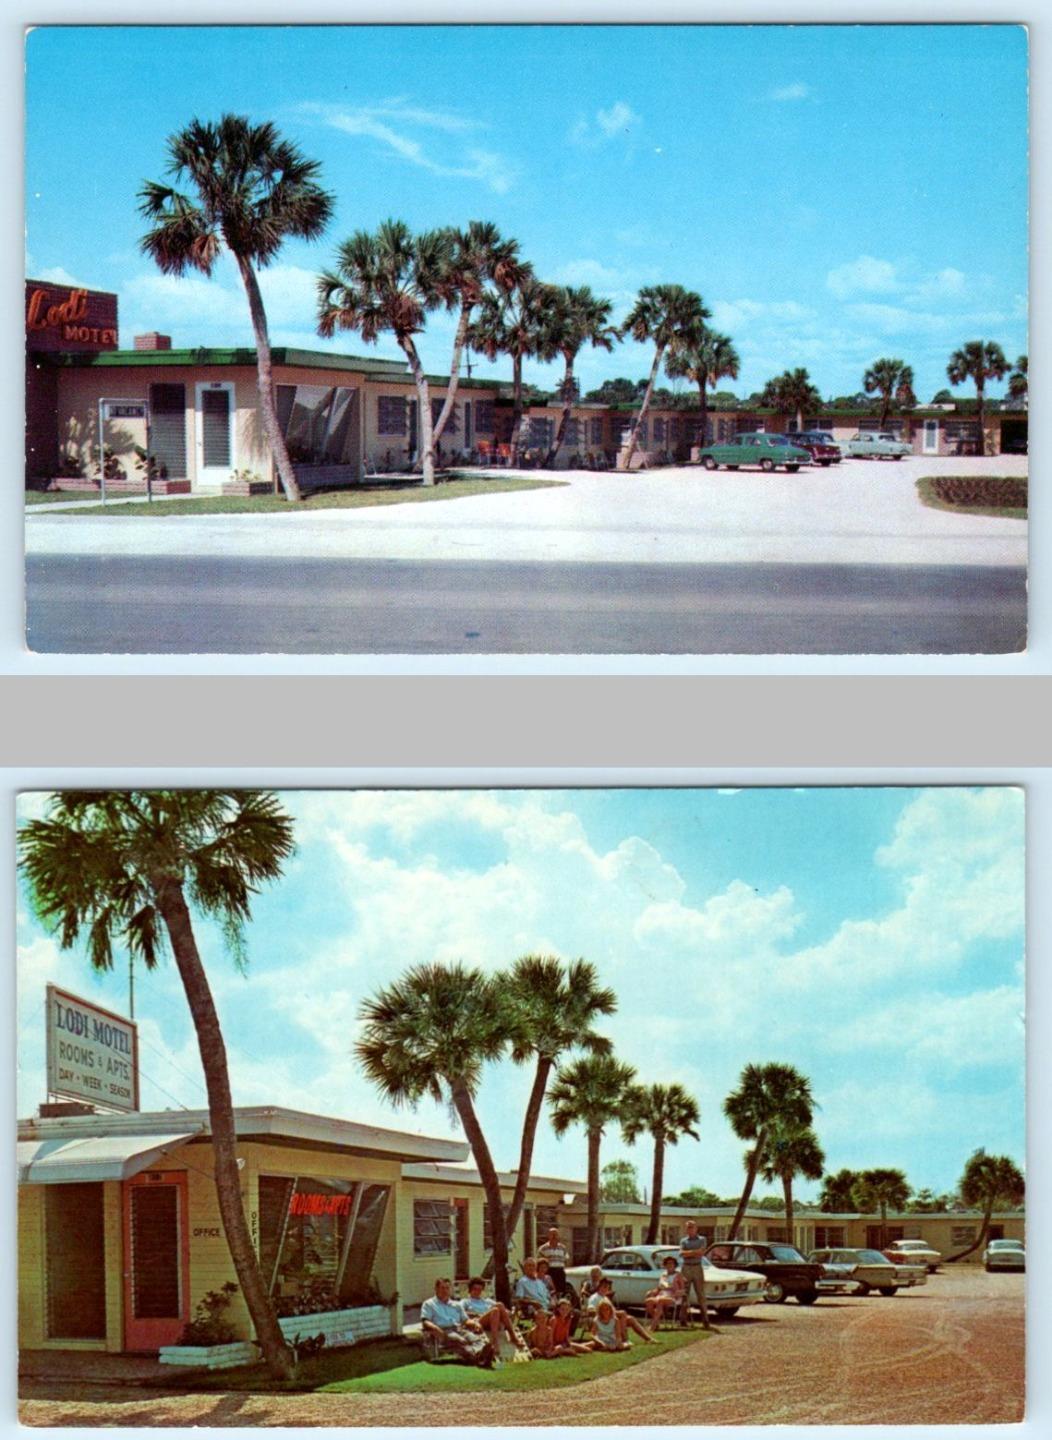 2 Postcards DAYTONA BEACH, Florida FL ~ Roadside LODI MOTEL c1950s-60s Cars